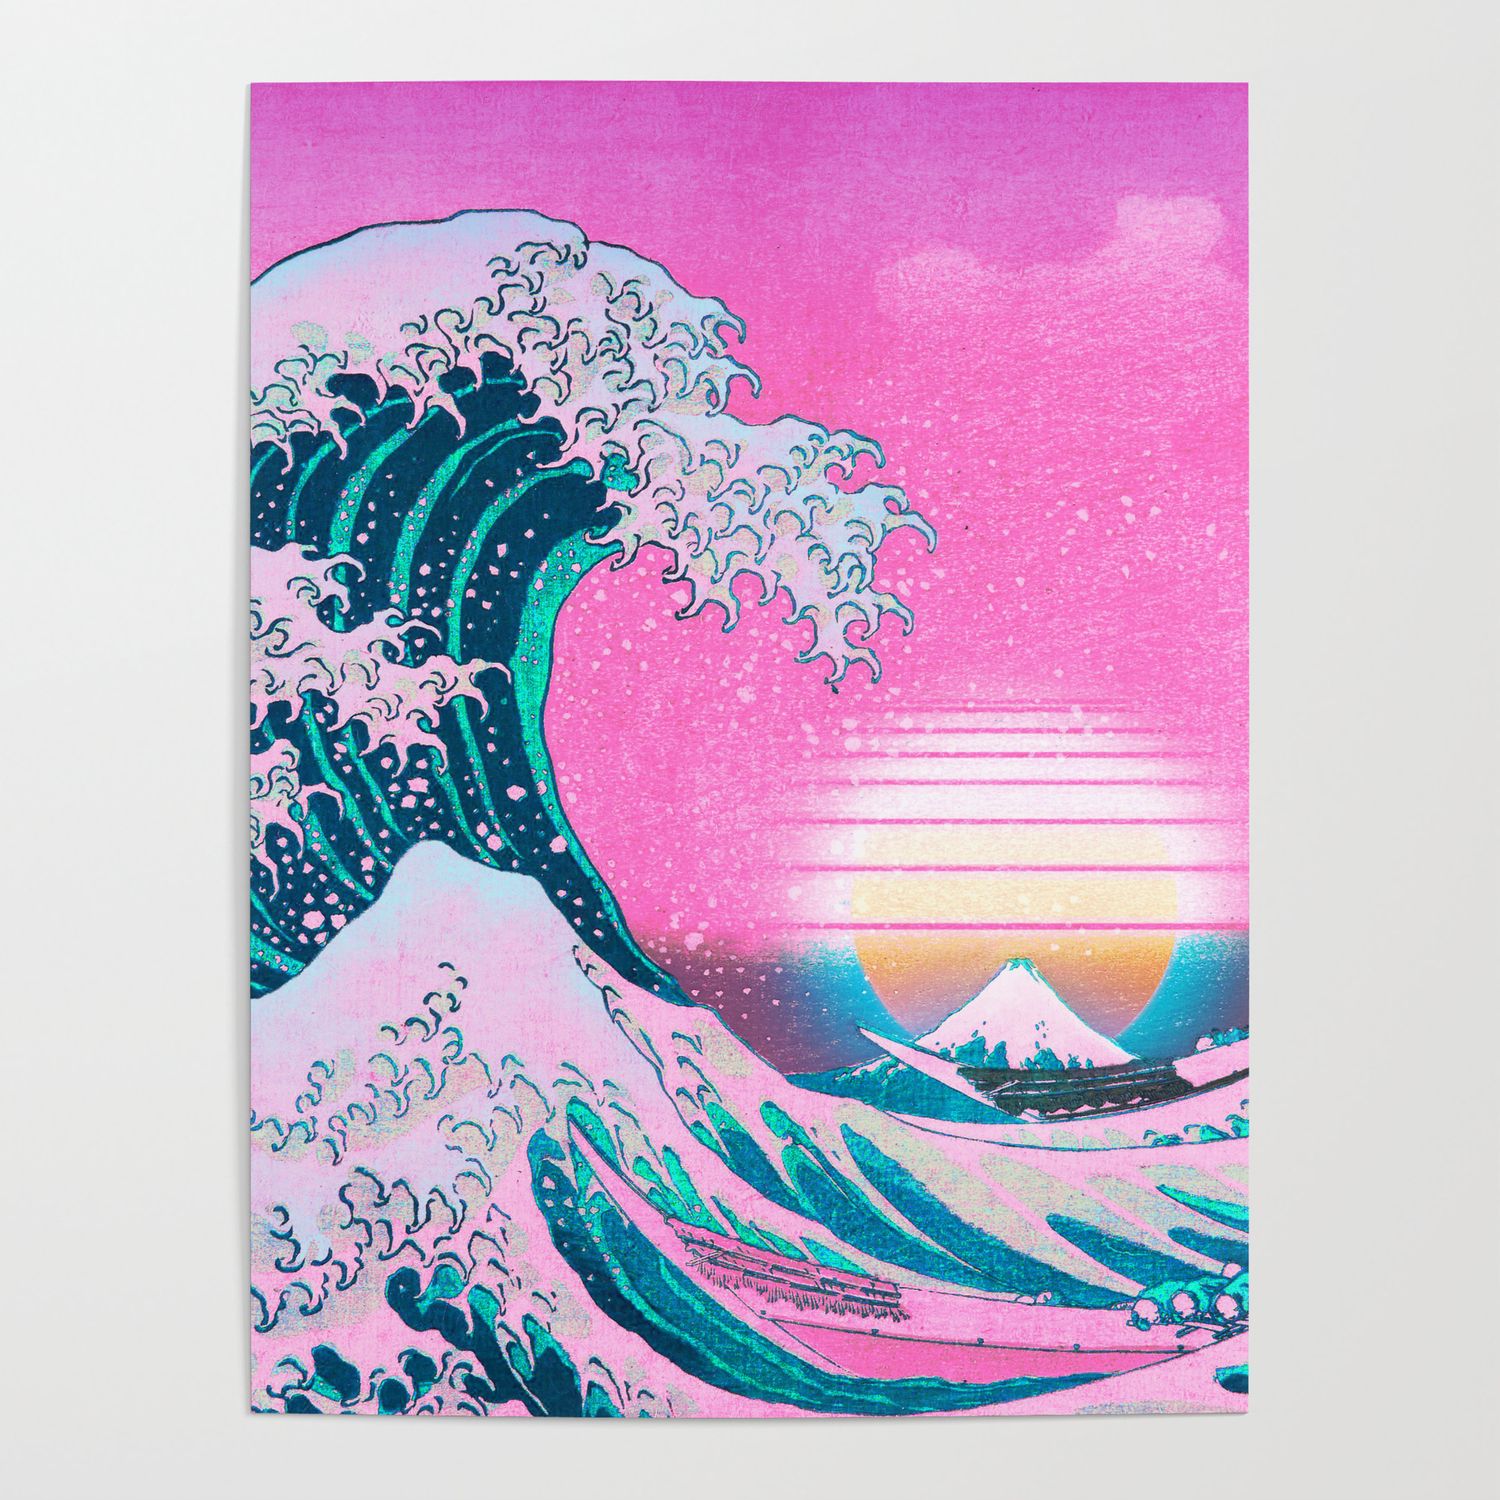 The great Wave off Kanagawa vaporwave